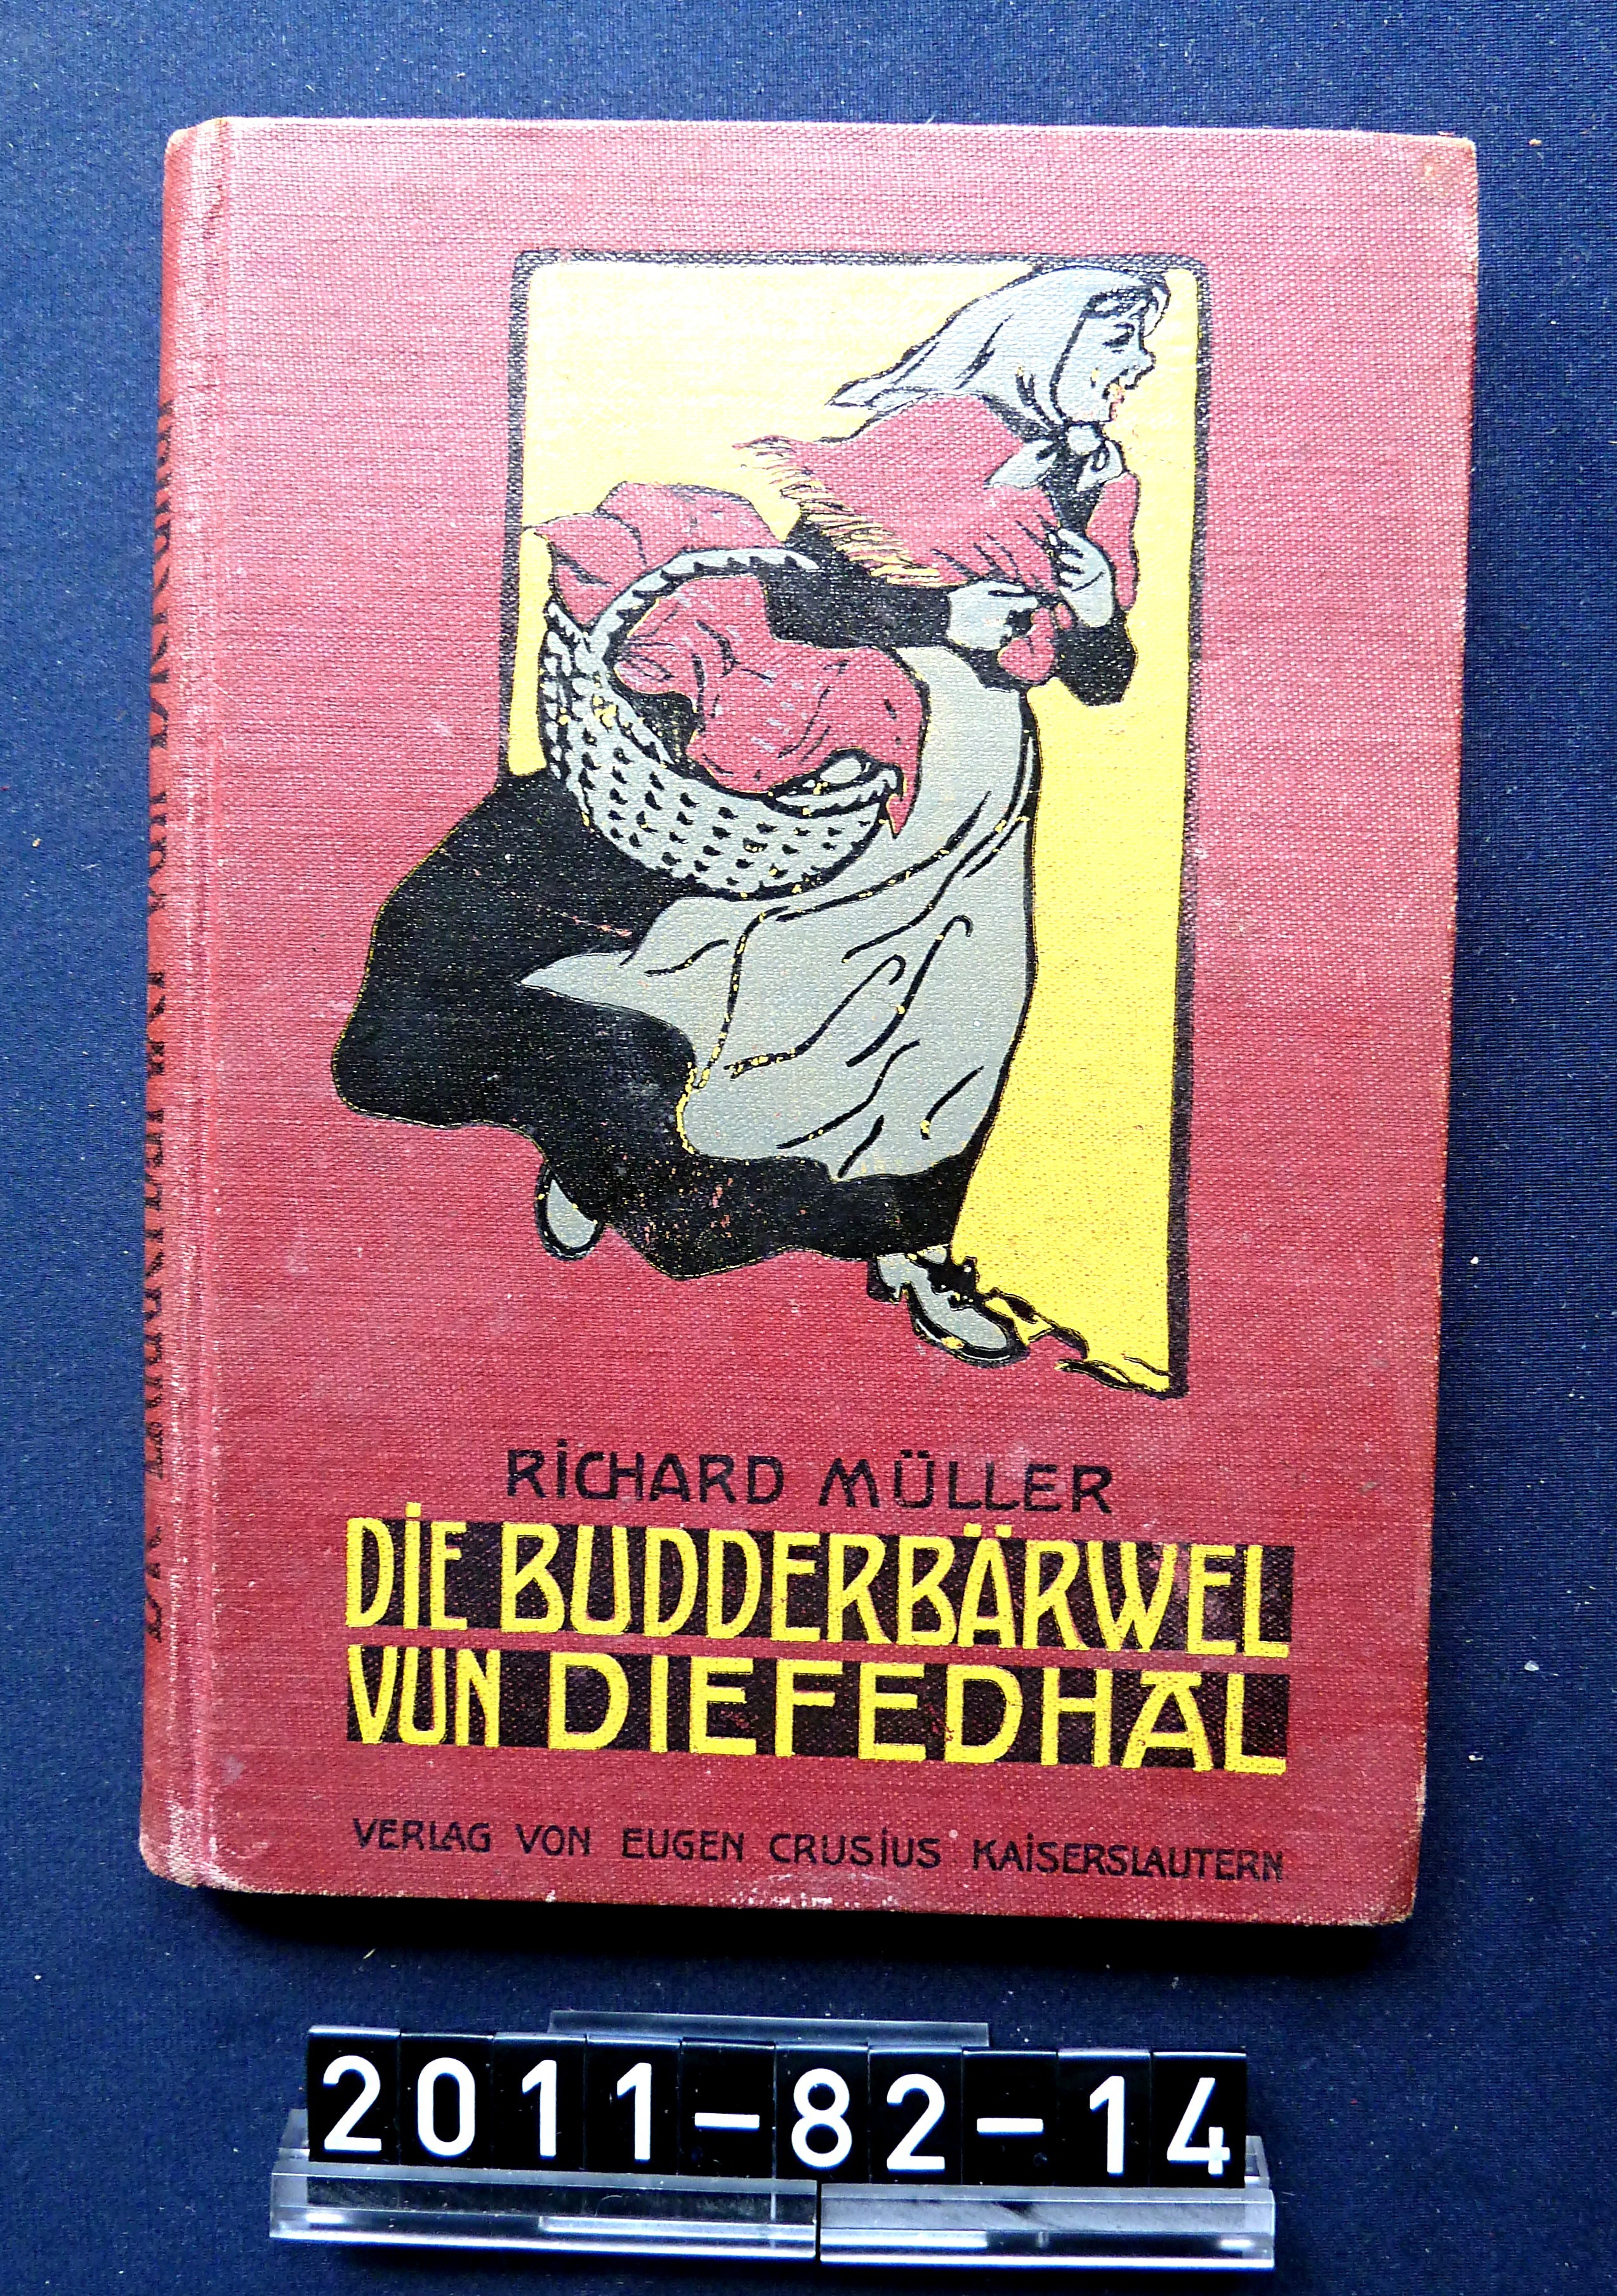 Buch; "Die Budderbärwel vun Diefedhal"; Richard Müller, 1909 (Stadtmuseum Bad Dürkheim, Museumsgesellschaft Bad Dürkheim e.V. CC BY-NC-SA)